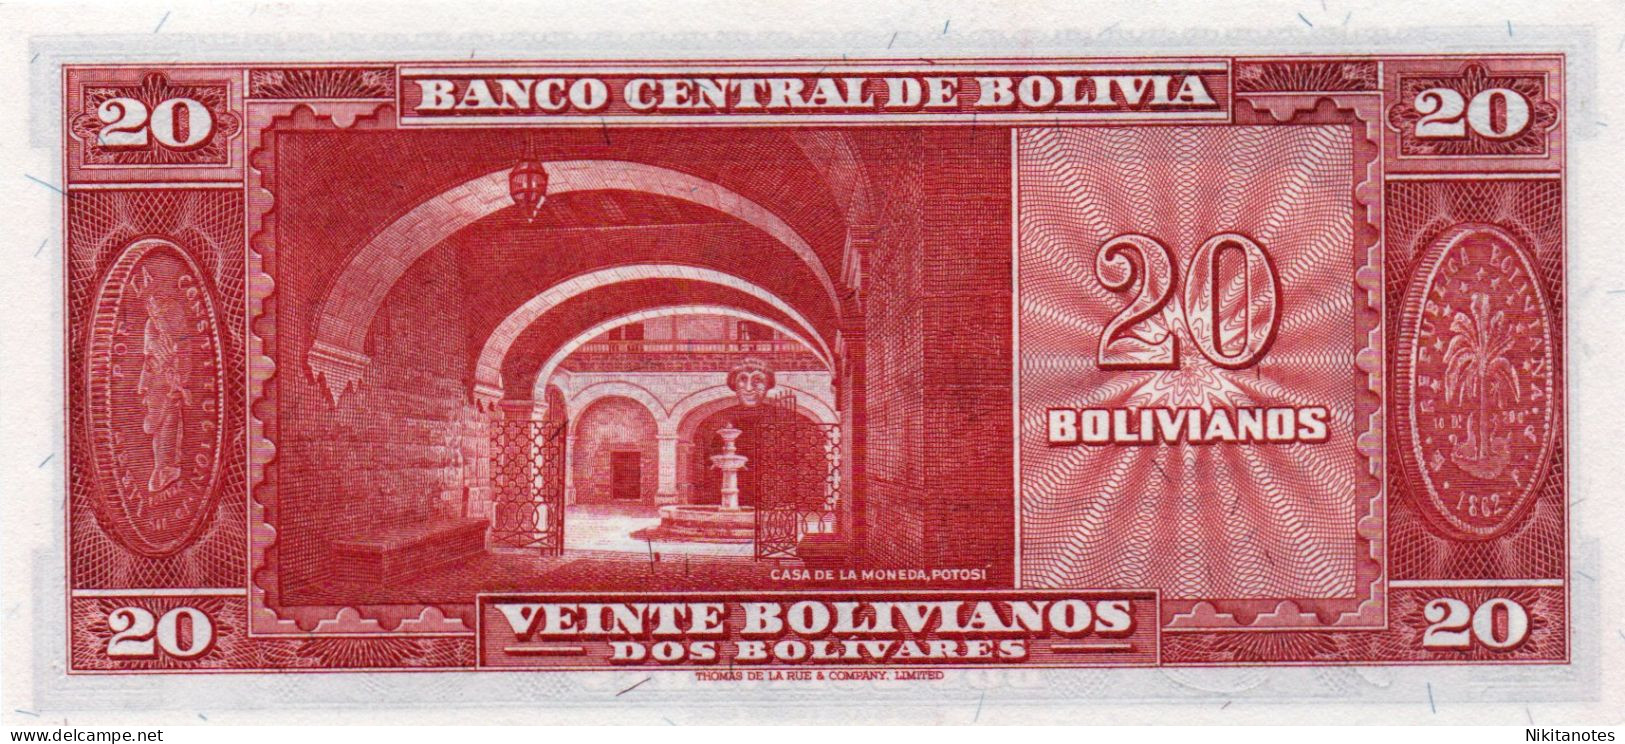 BOLIVIA BANKNOTE - 20 PESOS BOLIVIANOS LEY 1945 UNC See Scan - Bolivia